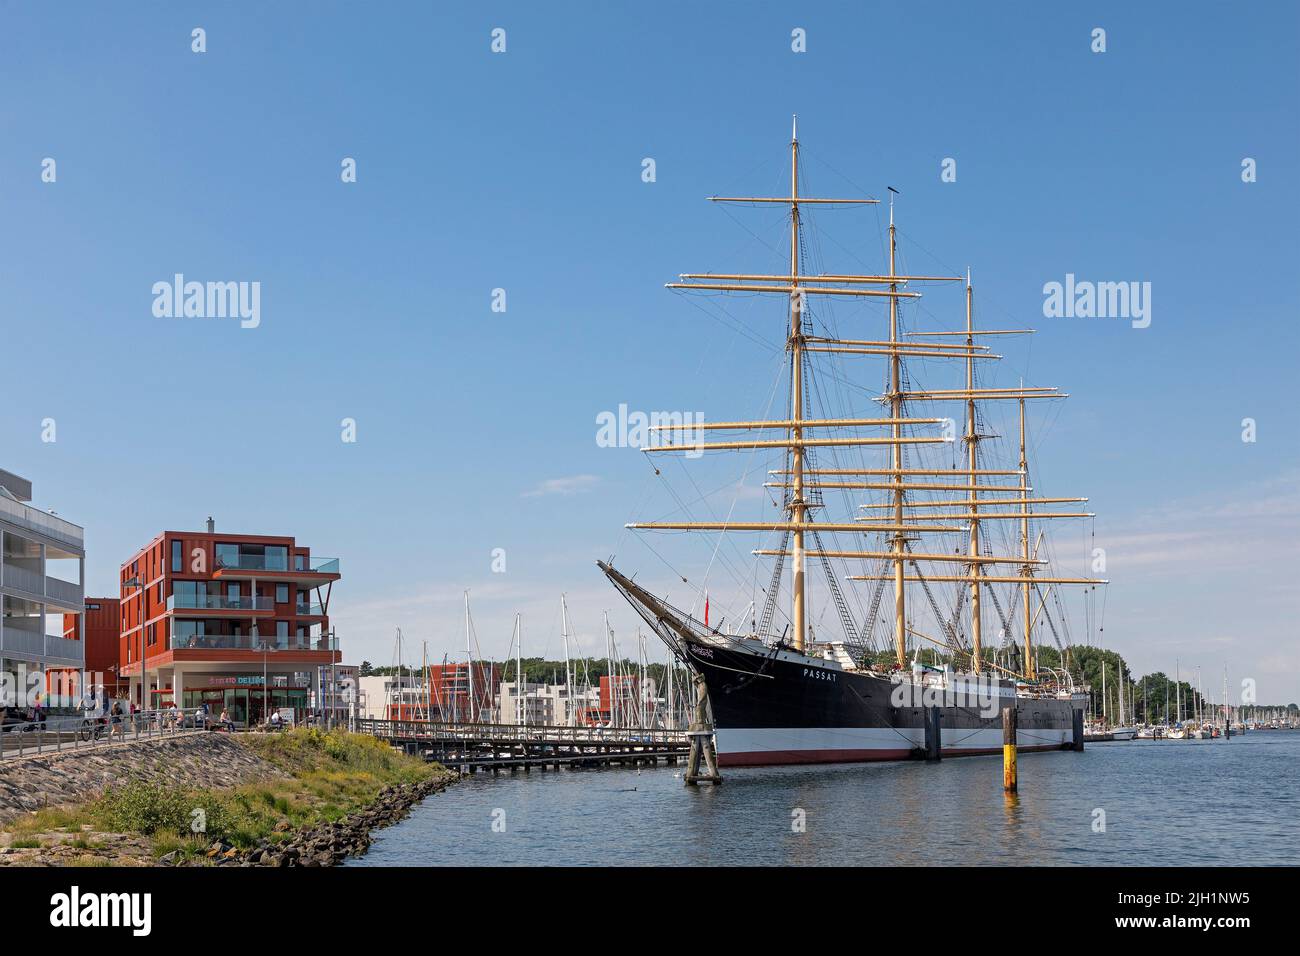 Waterfront quarter, Museum sailing ship Passat, Priwall, Travemünde, Lübeck, Schleswig-Holstein, Germany Stock Photo